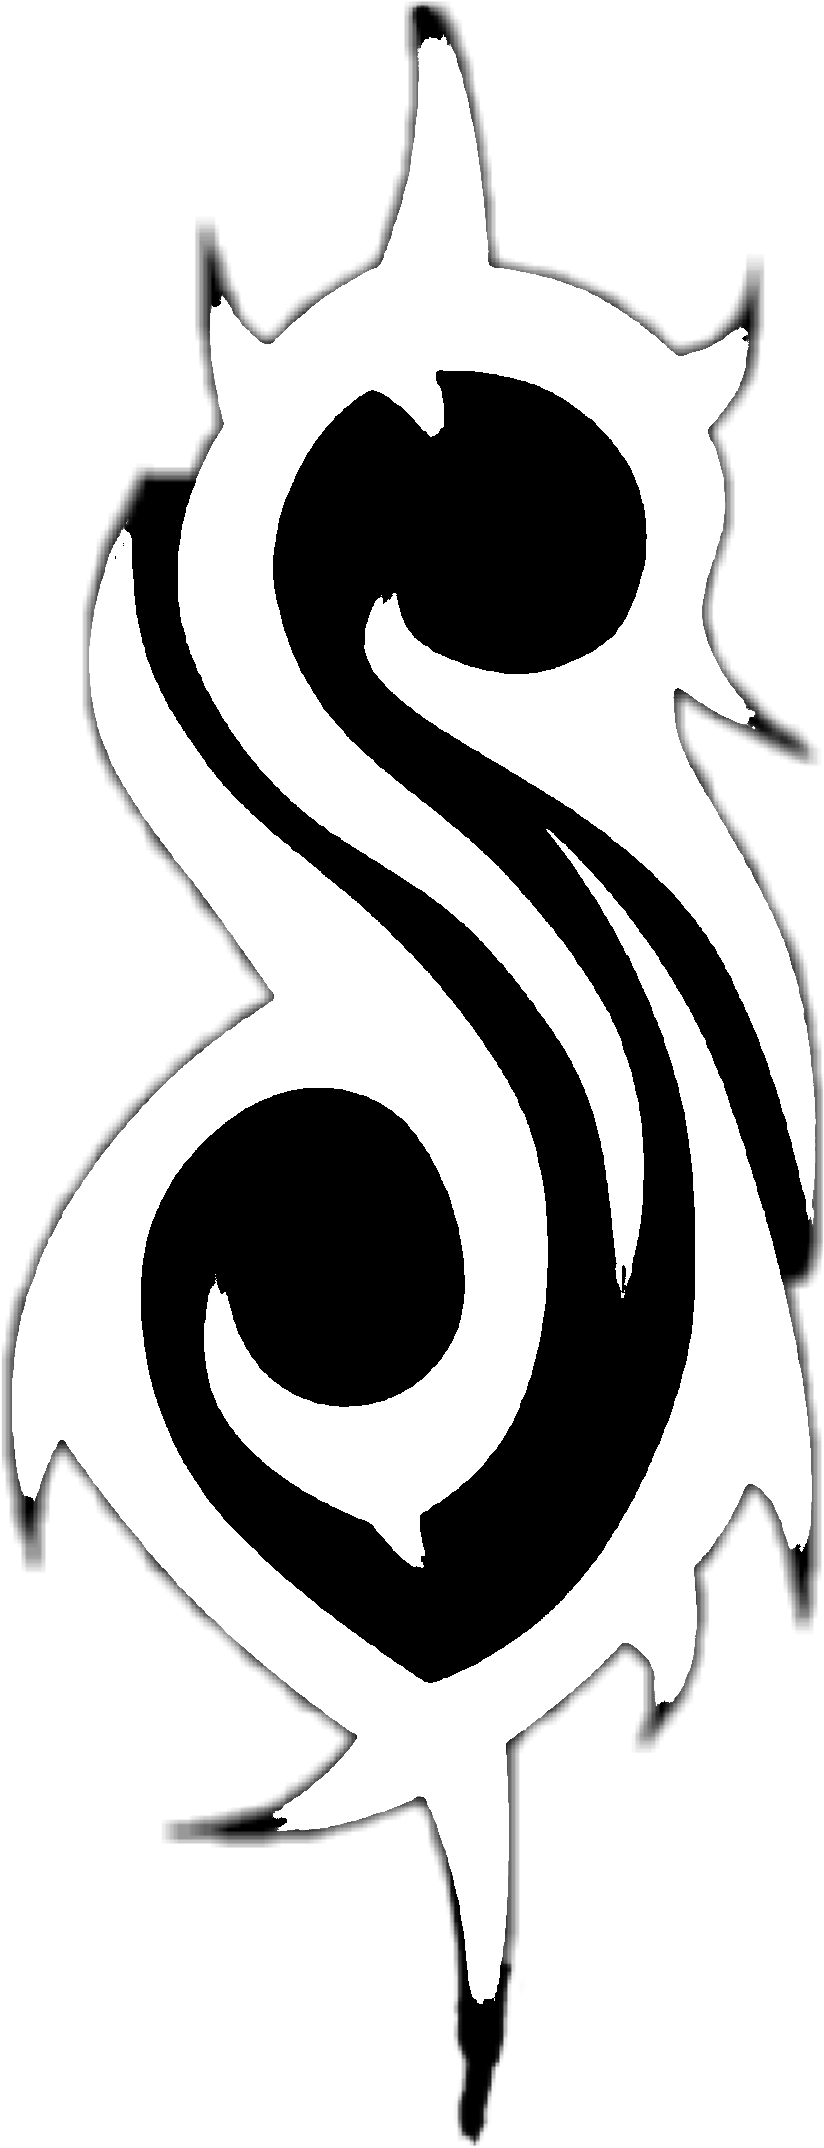 Slipknot PNG Image HD